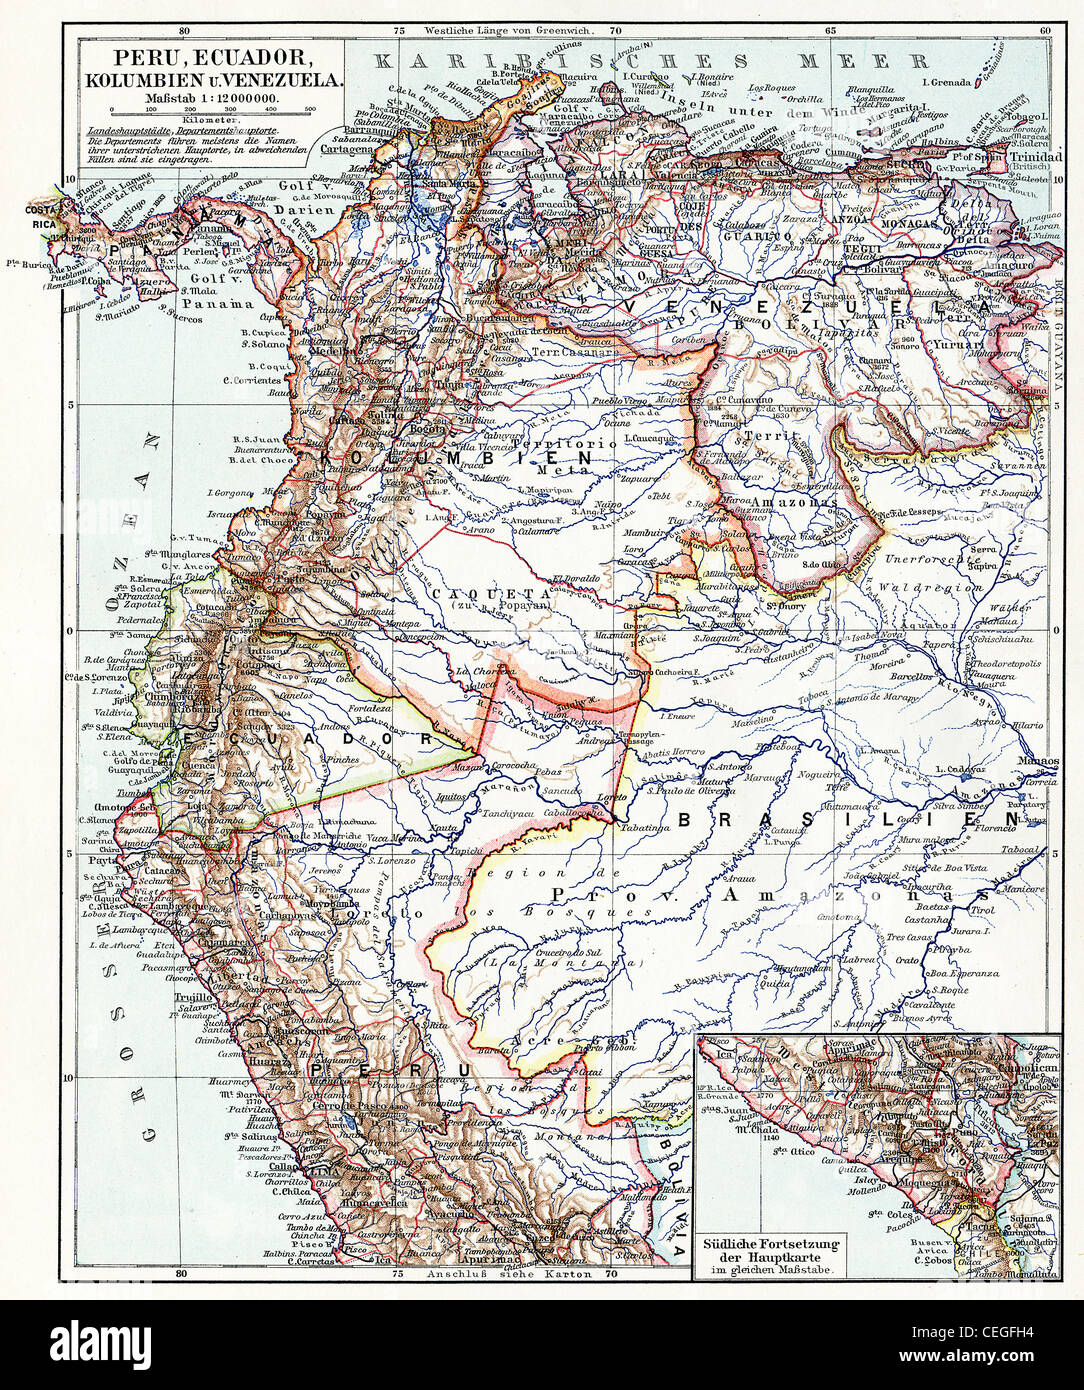 Karte von Peru, Ecuador, Kolumbien und Venezuela. Stockfoto